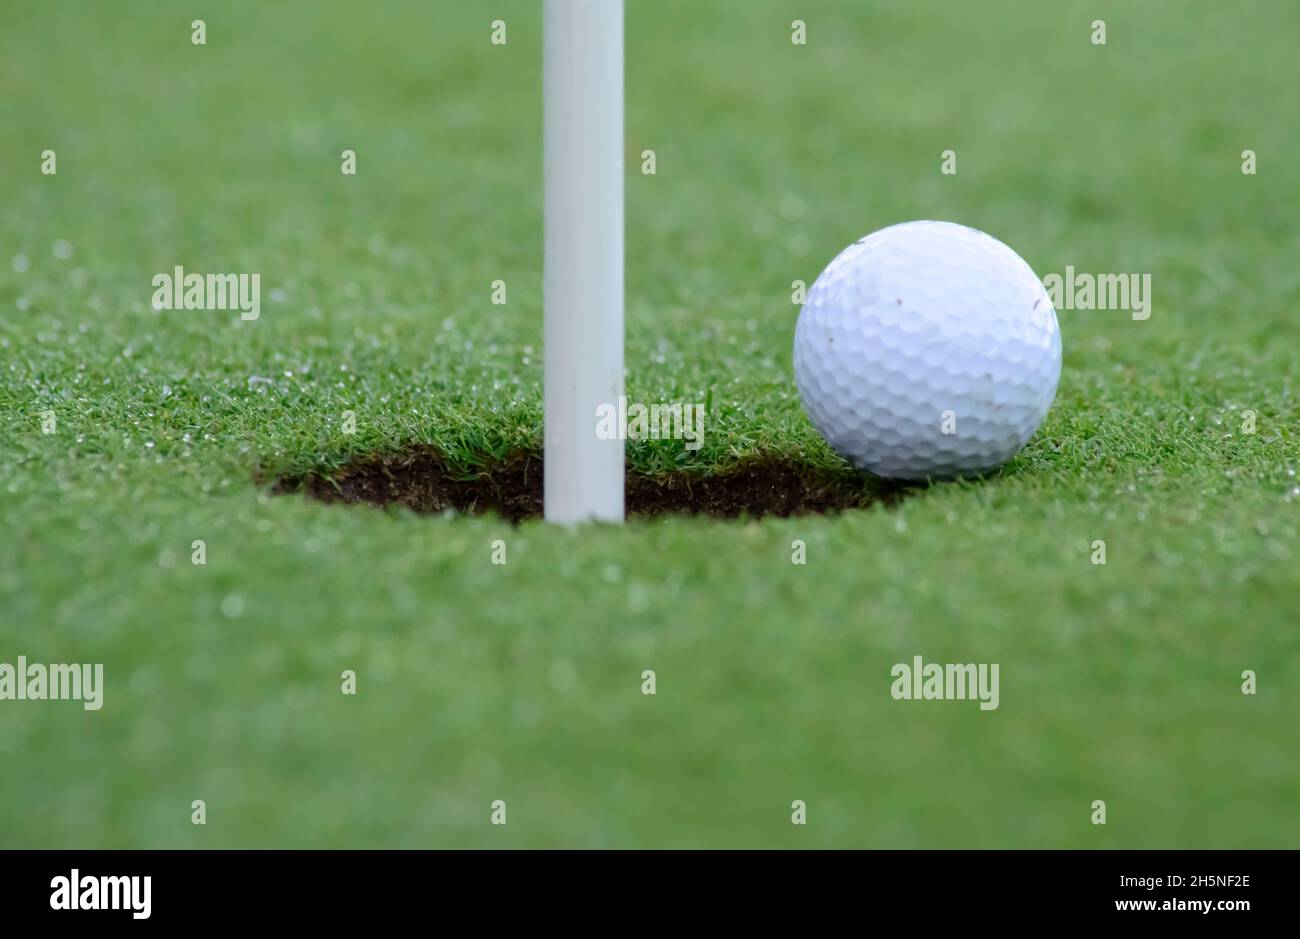 es una fotografia horizontal en la que se ve perfectamente enfocada la pelota de golf en el borde del hoyo Stock Photo